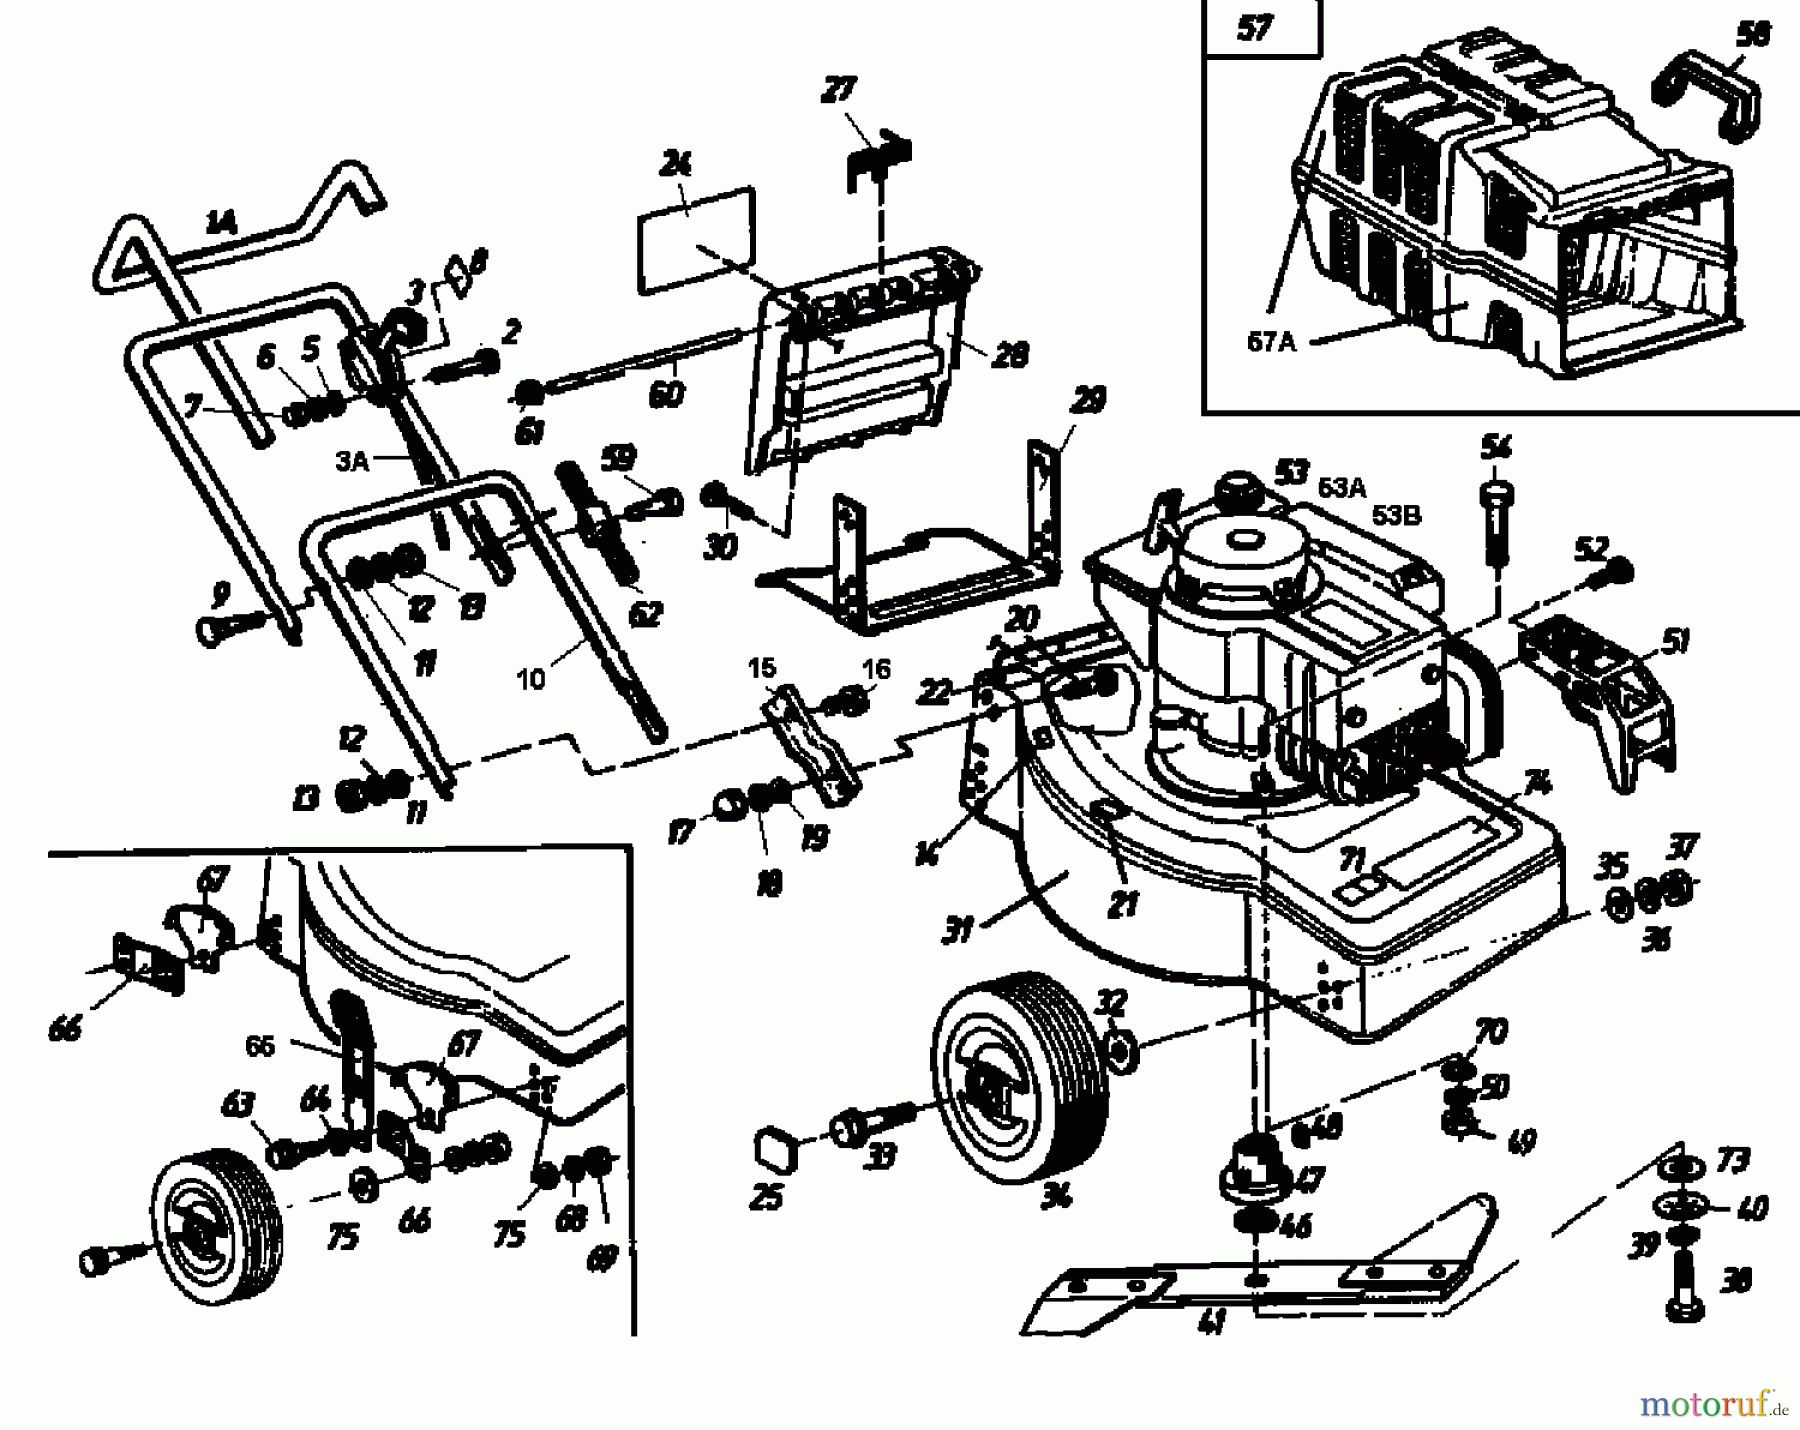  Golf Petrol mower Golf HBL 02880.04  (1992) Basic machine